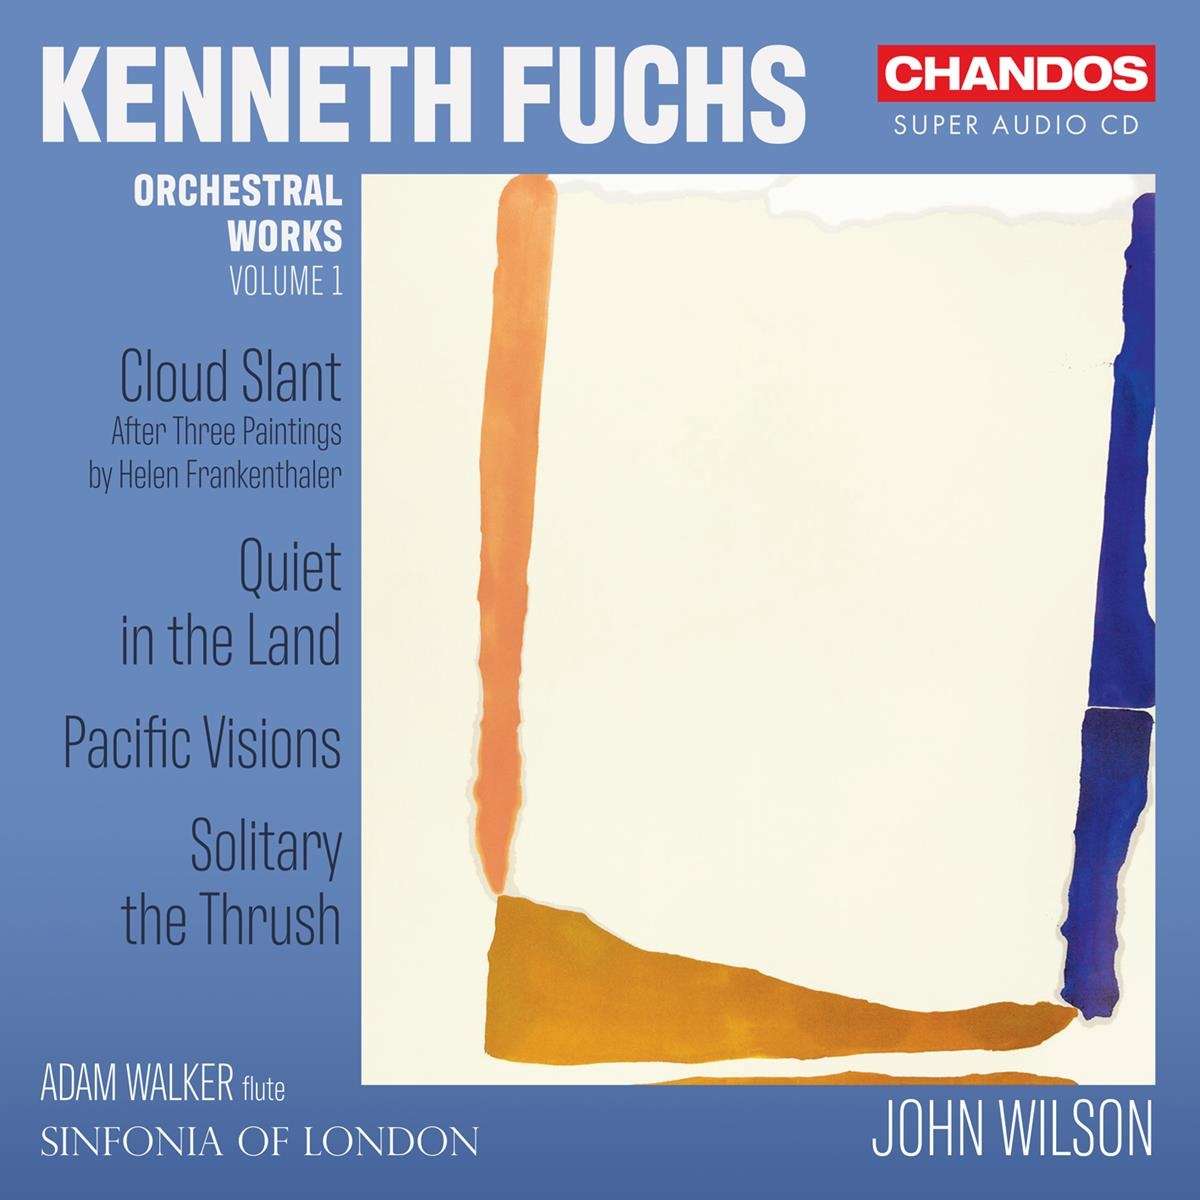 Sinfonia of London / John Wilson - Kenneth Fuchs Orchestral Works Vol. 1